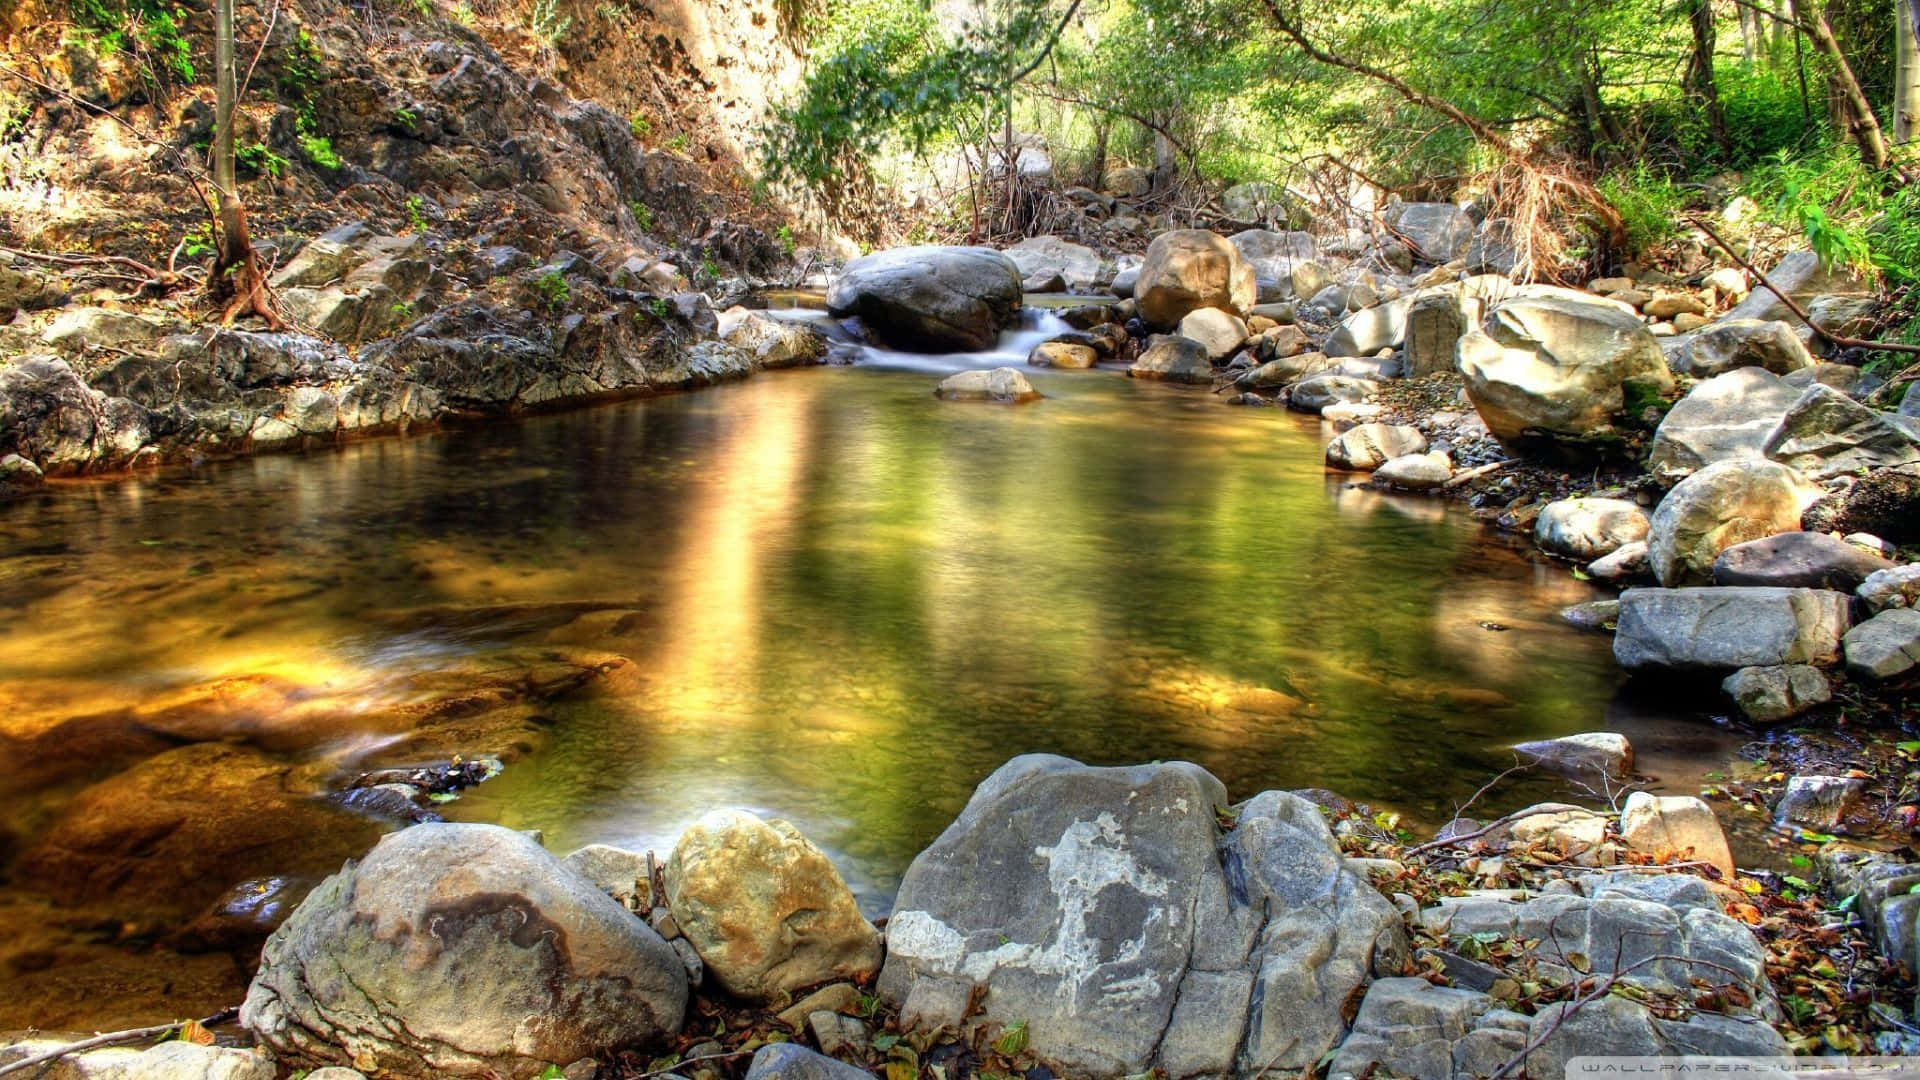 A Peaceful Walk Beside a Creek